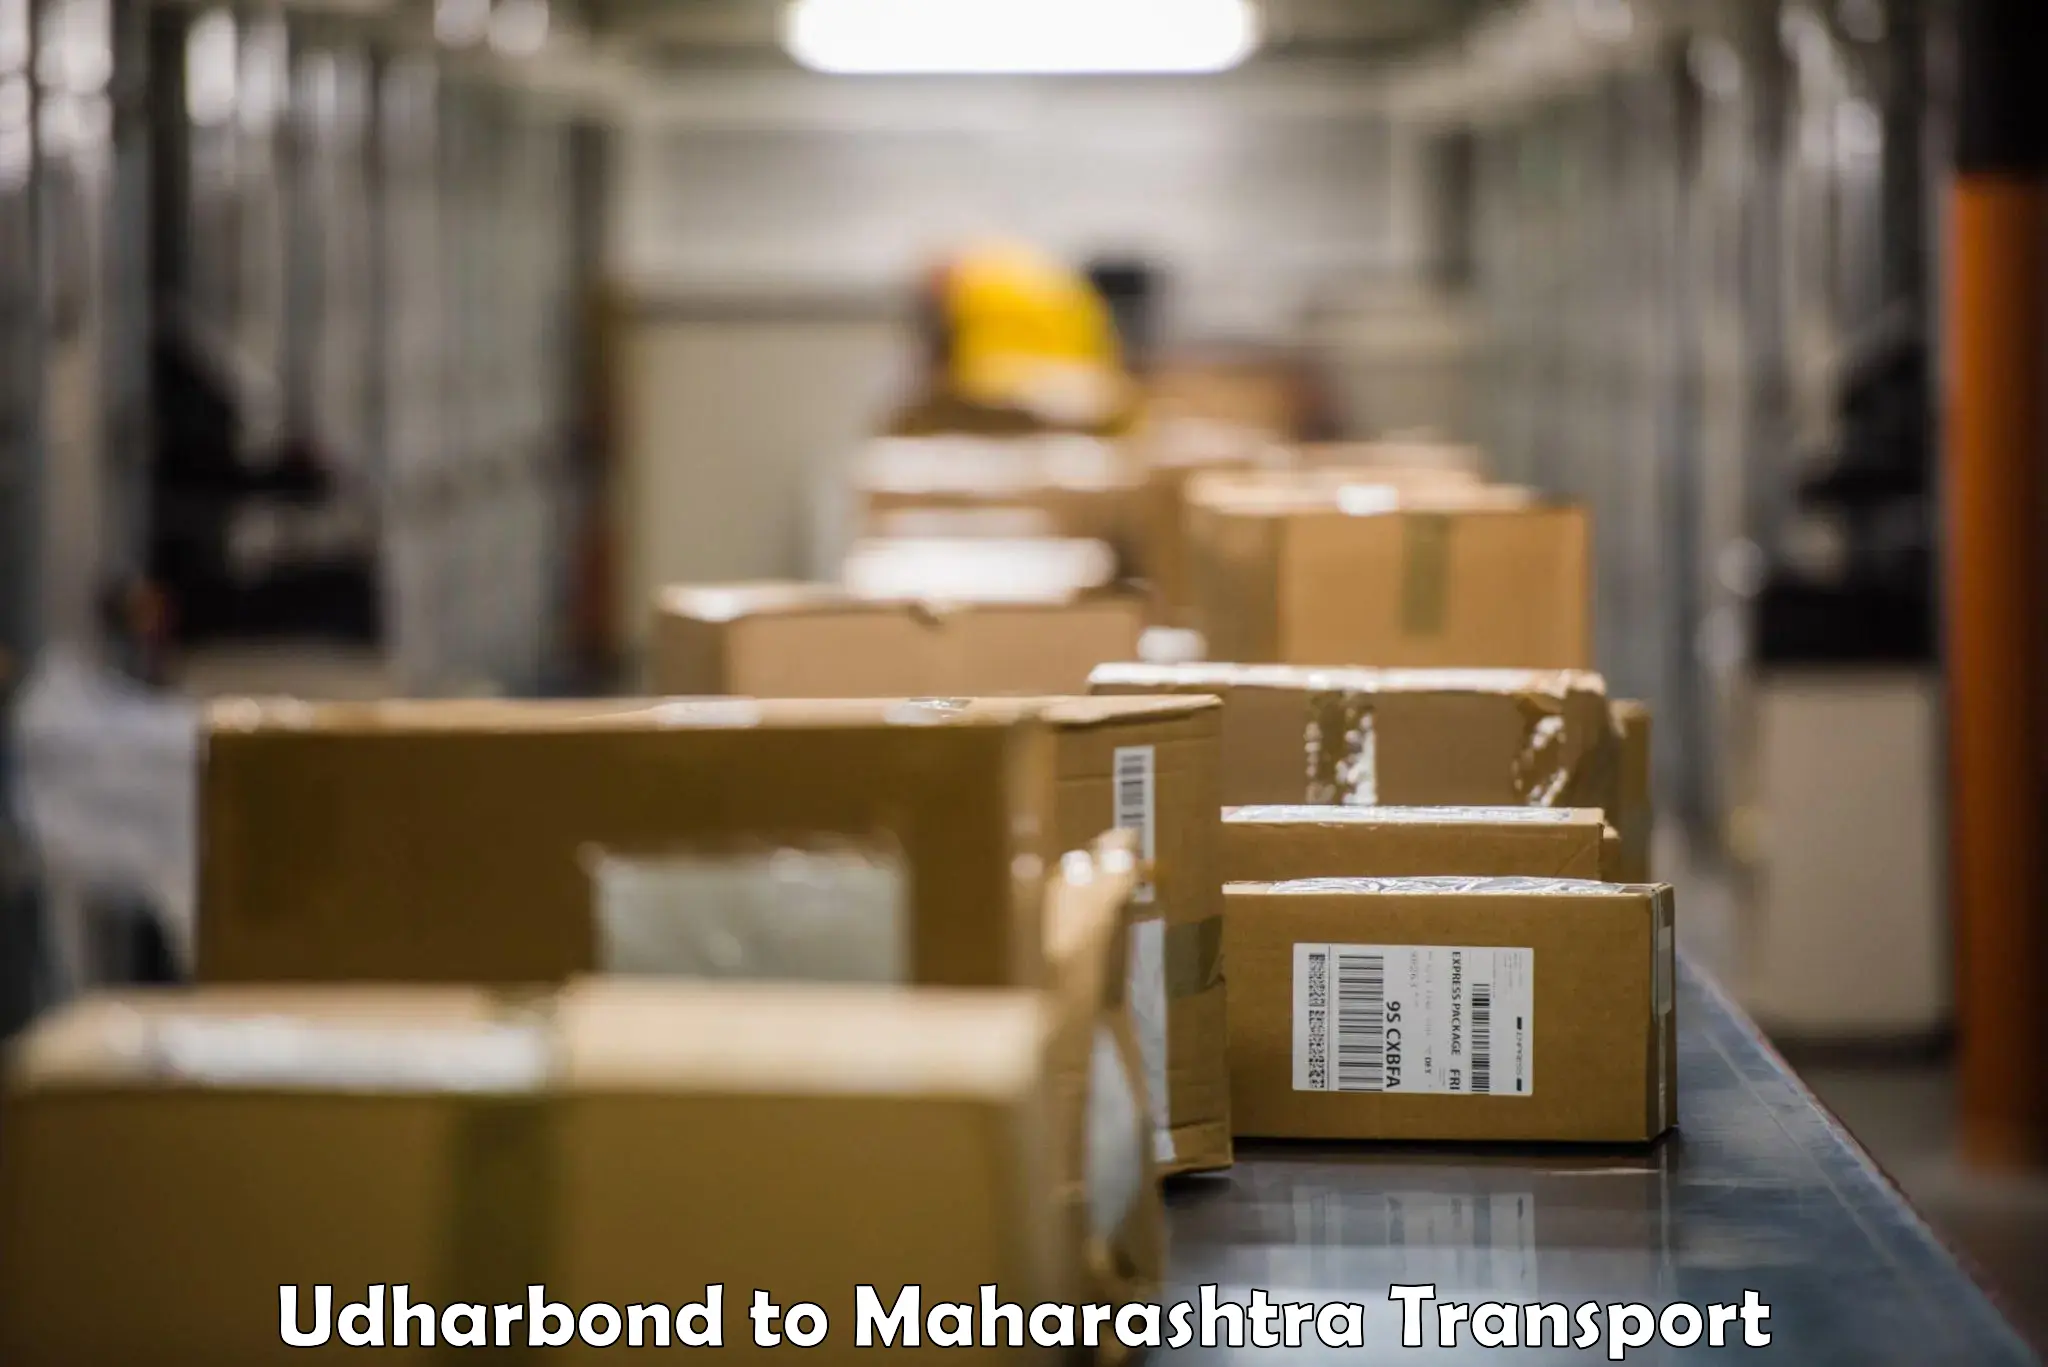 Transport in sharing Udharbond to Bhandara